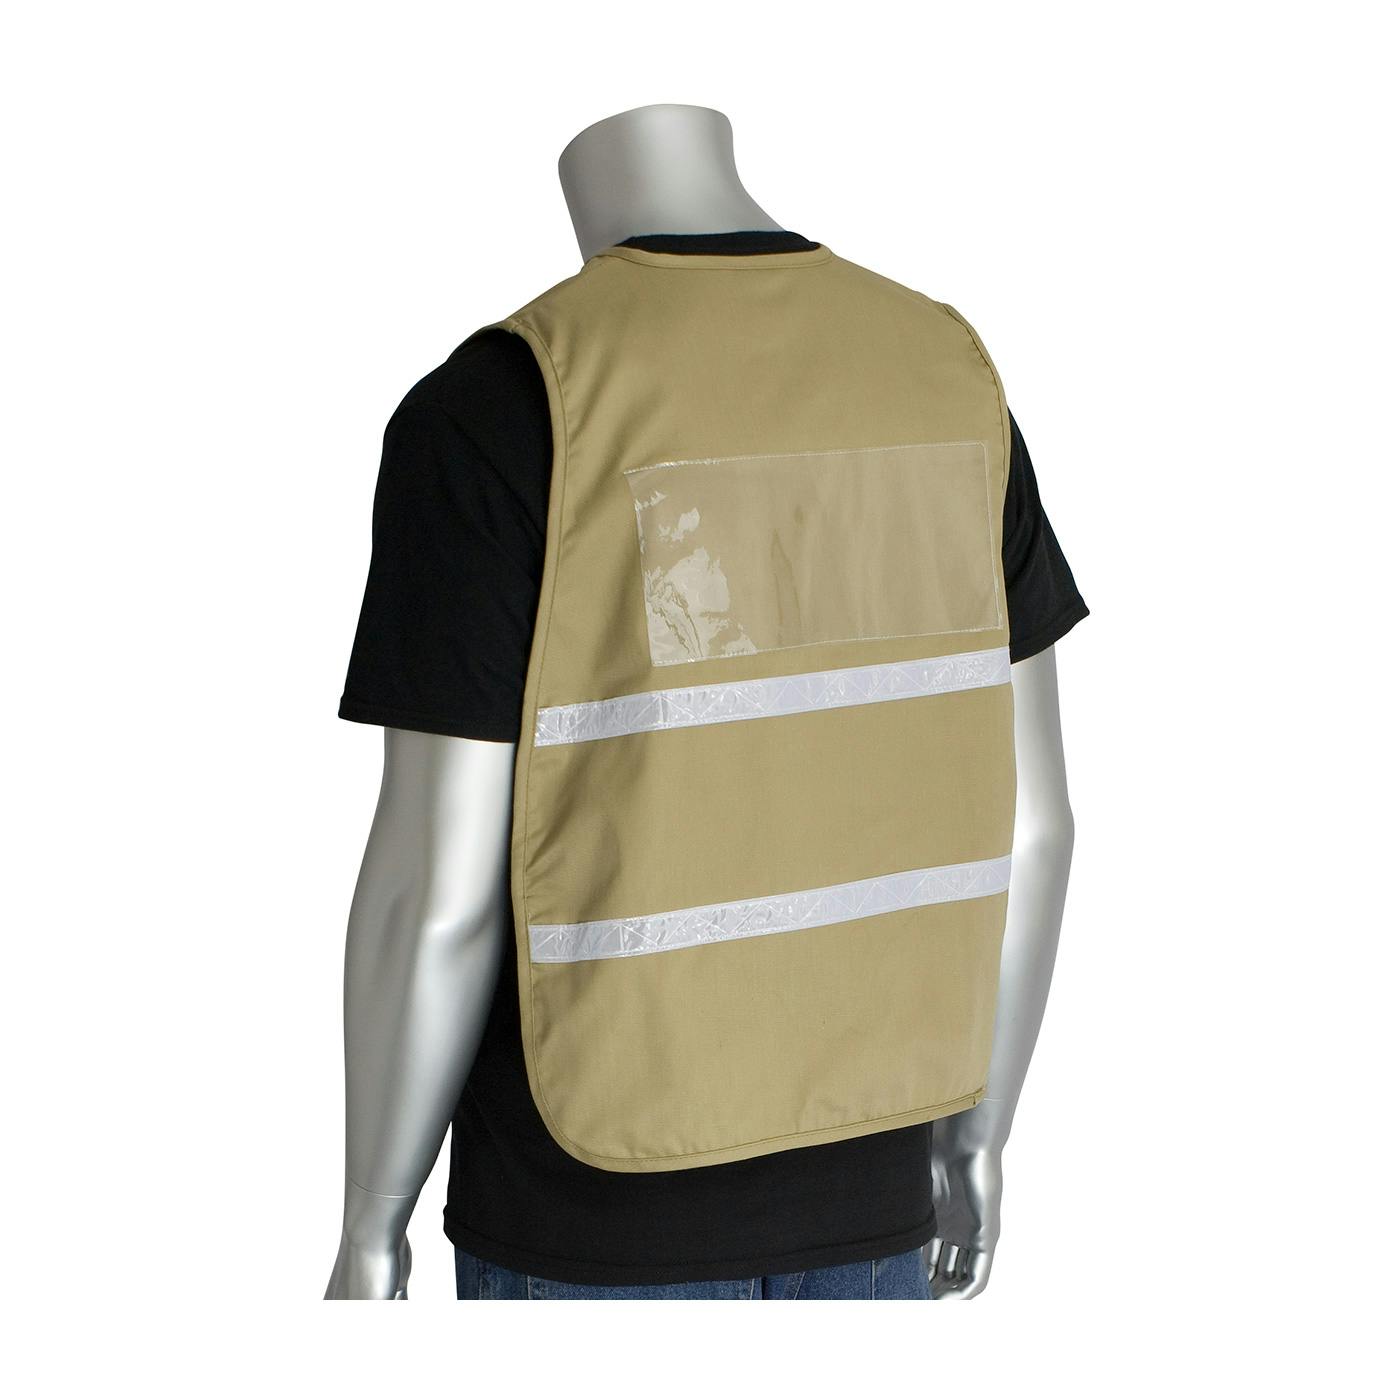 Non-ANSI Incident Command Vest - Cotton/Polyester Blend, Tan (300-2506)